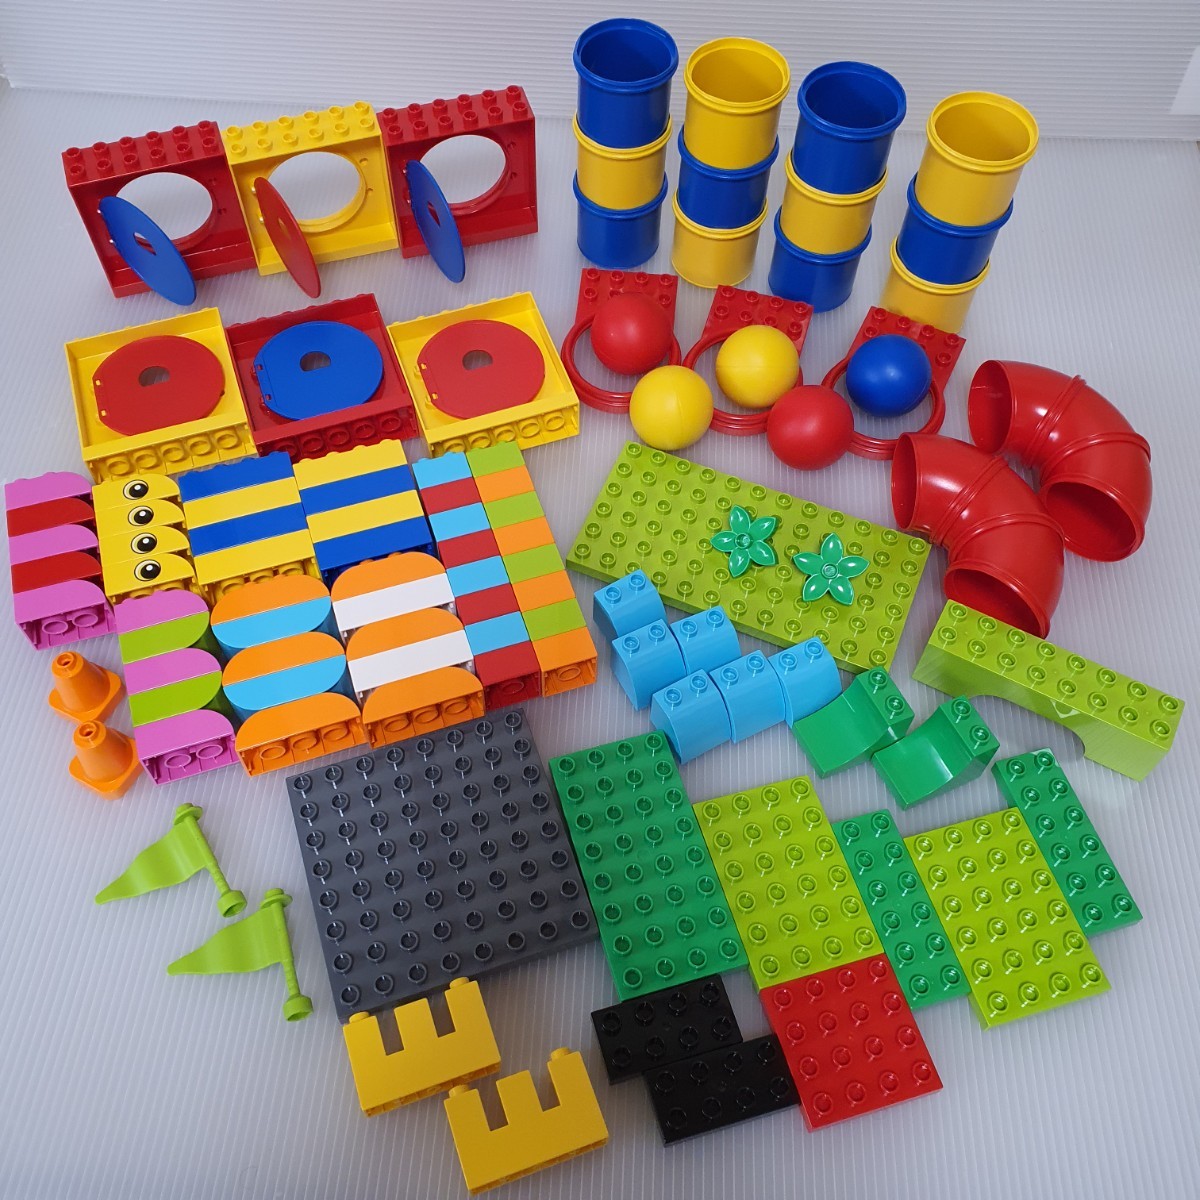  Lego ete.ke-shon Duplo LEGO Education камера комплект Duplo развивающая игрушка Lego блок 